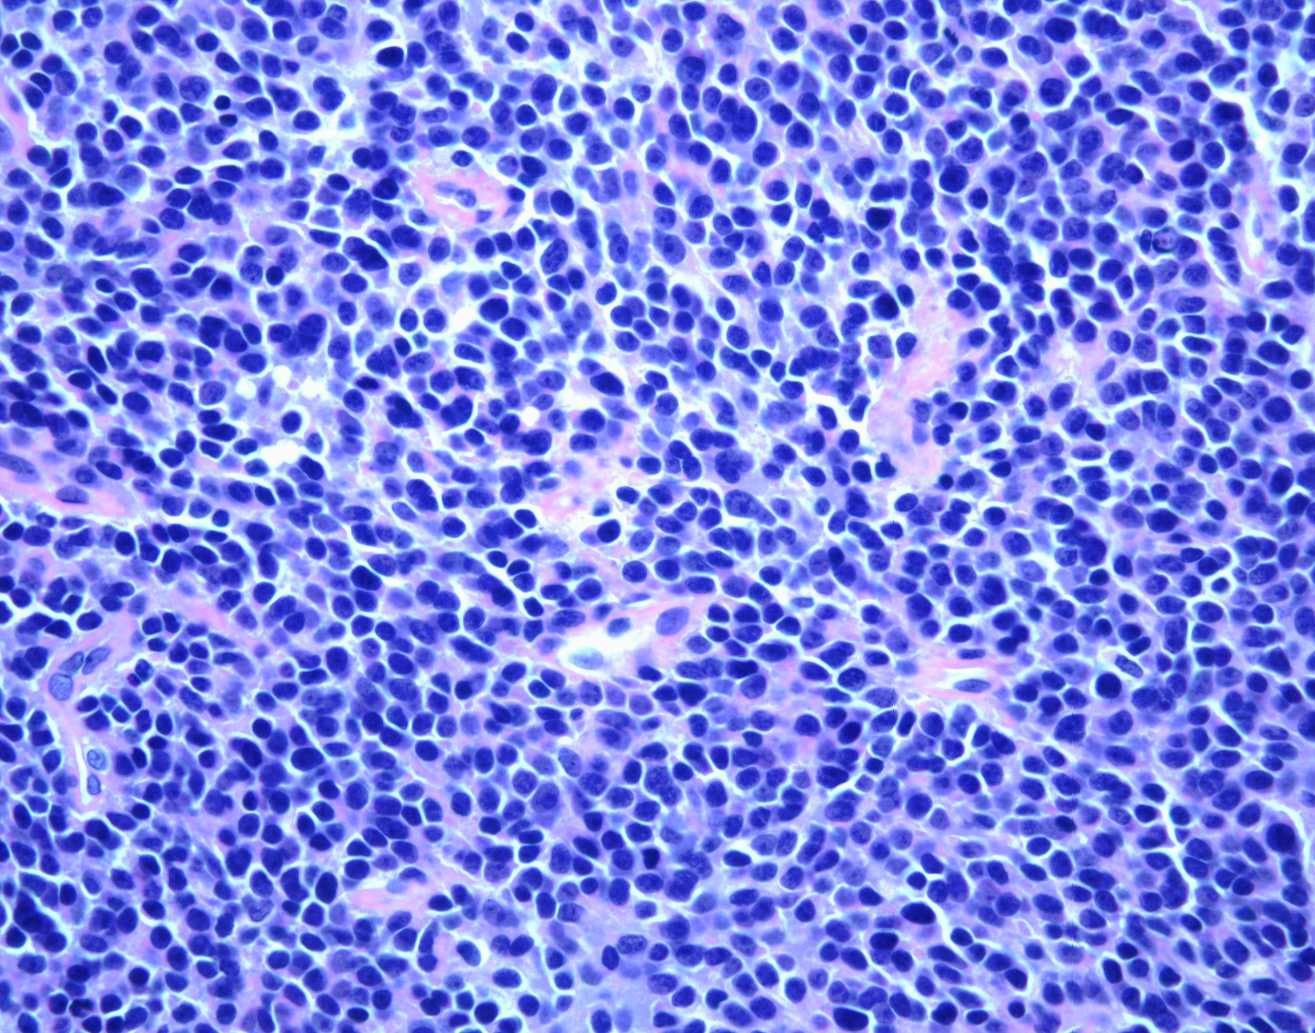 Microscopic view of Ewing's sarcoma